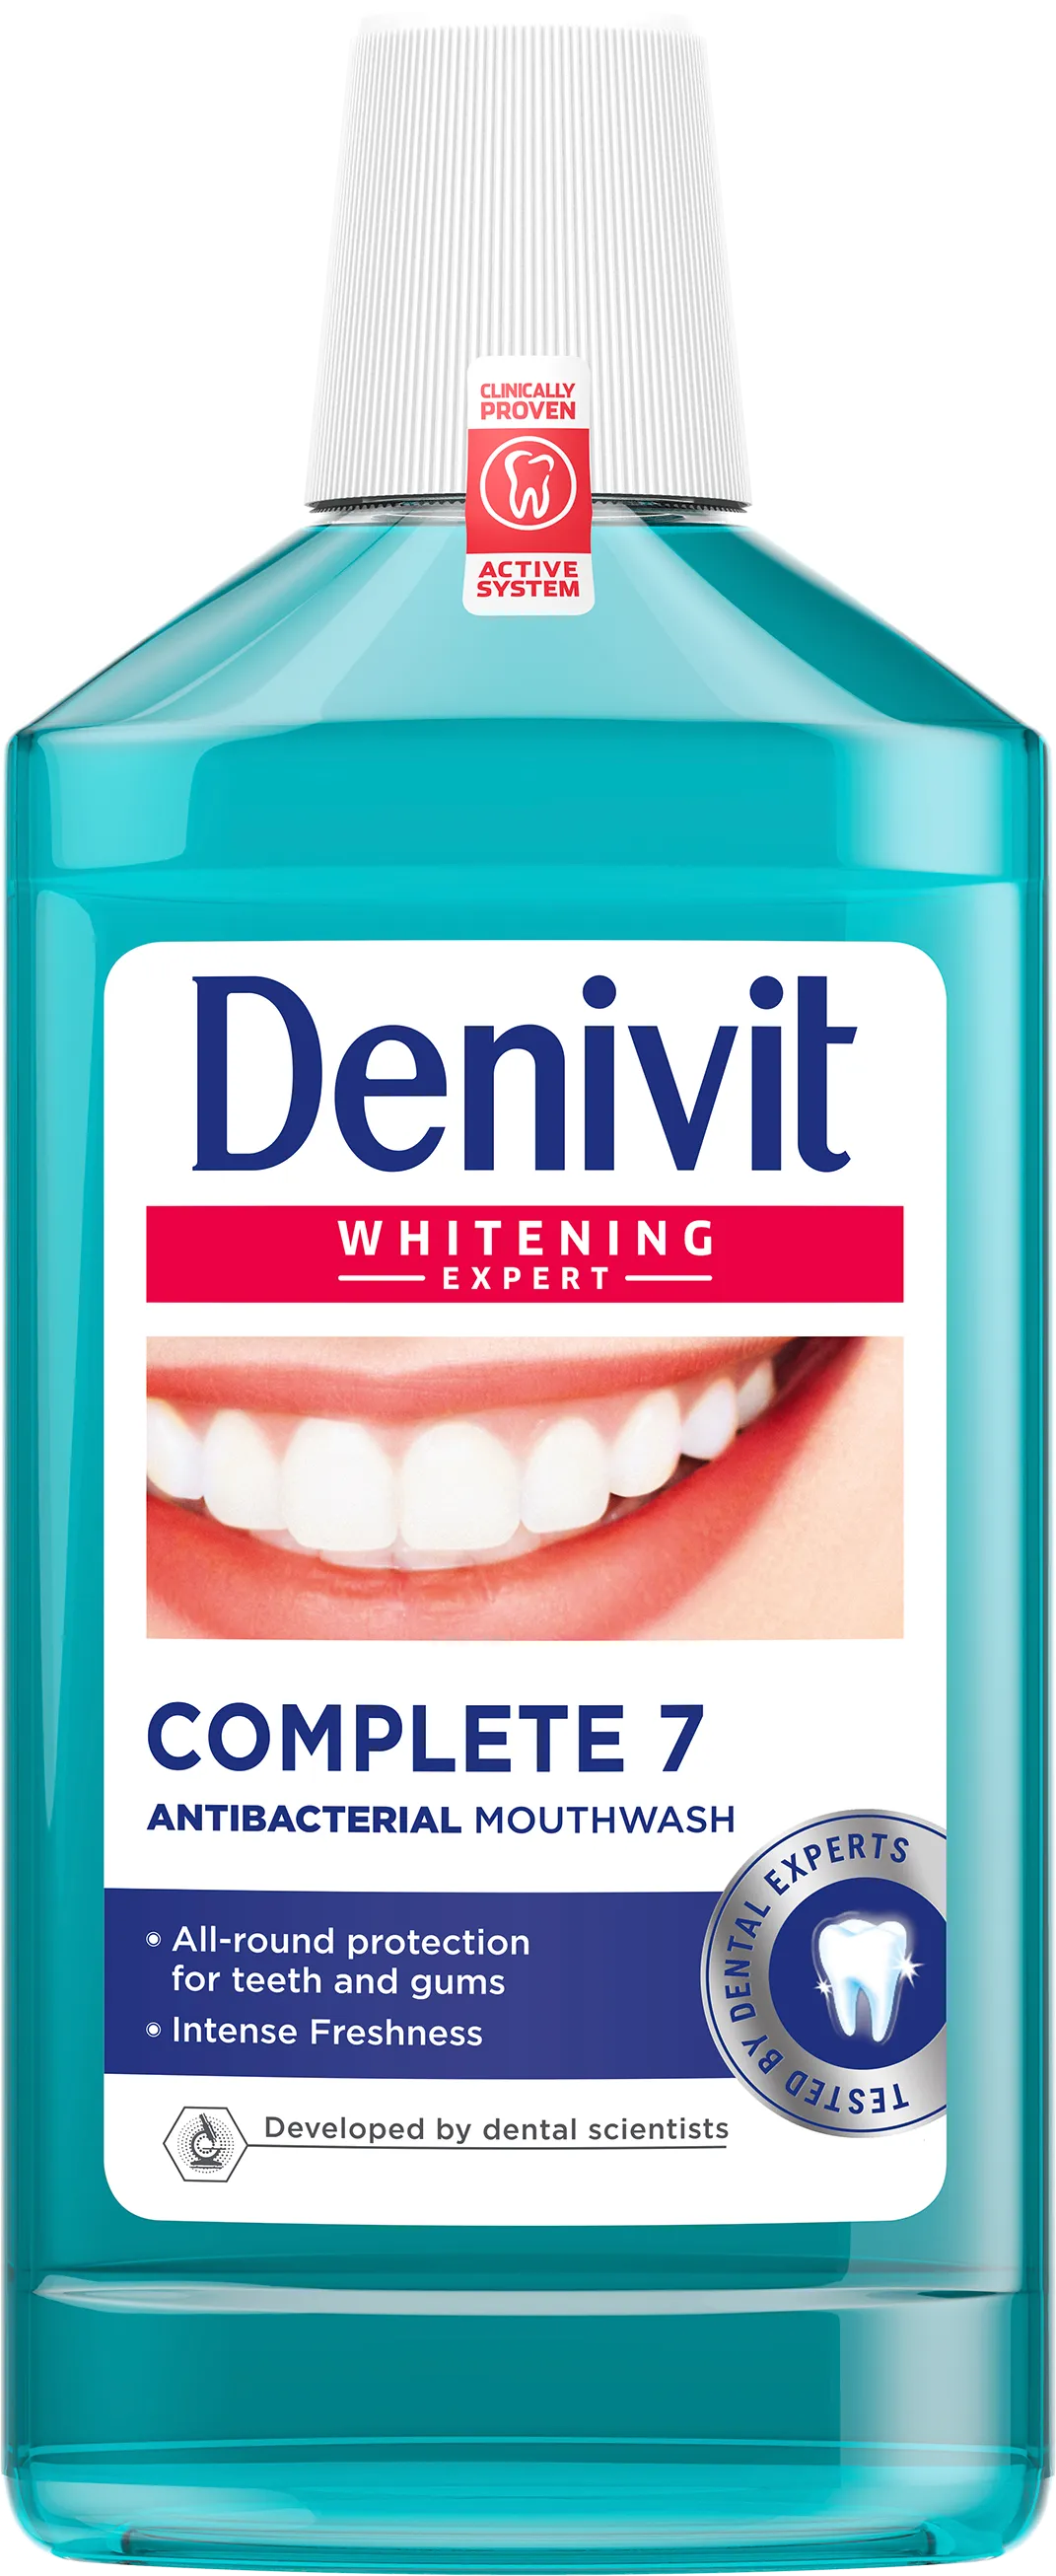 Denivit Whitening Expert Complete 7 płyn do płukania jamy ustnej, 500 ml